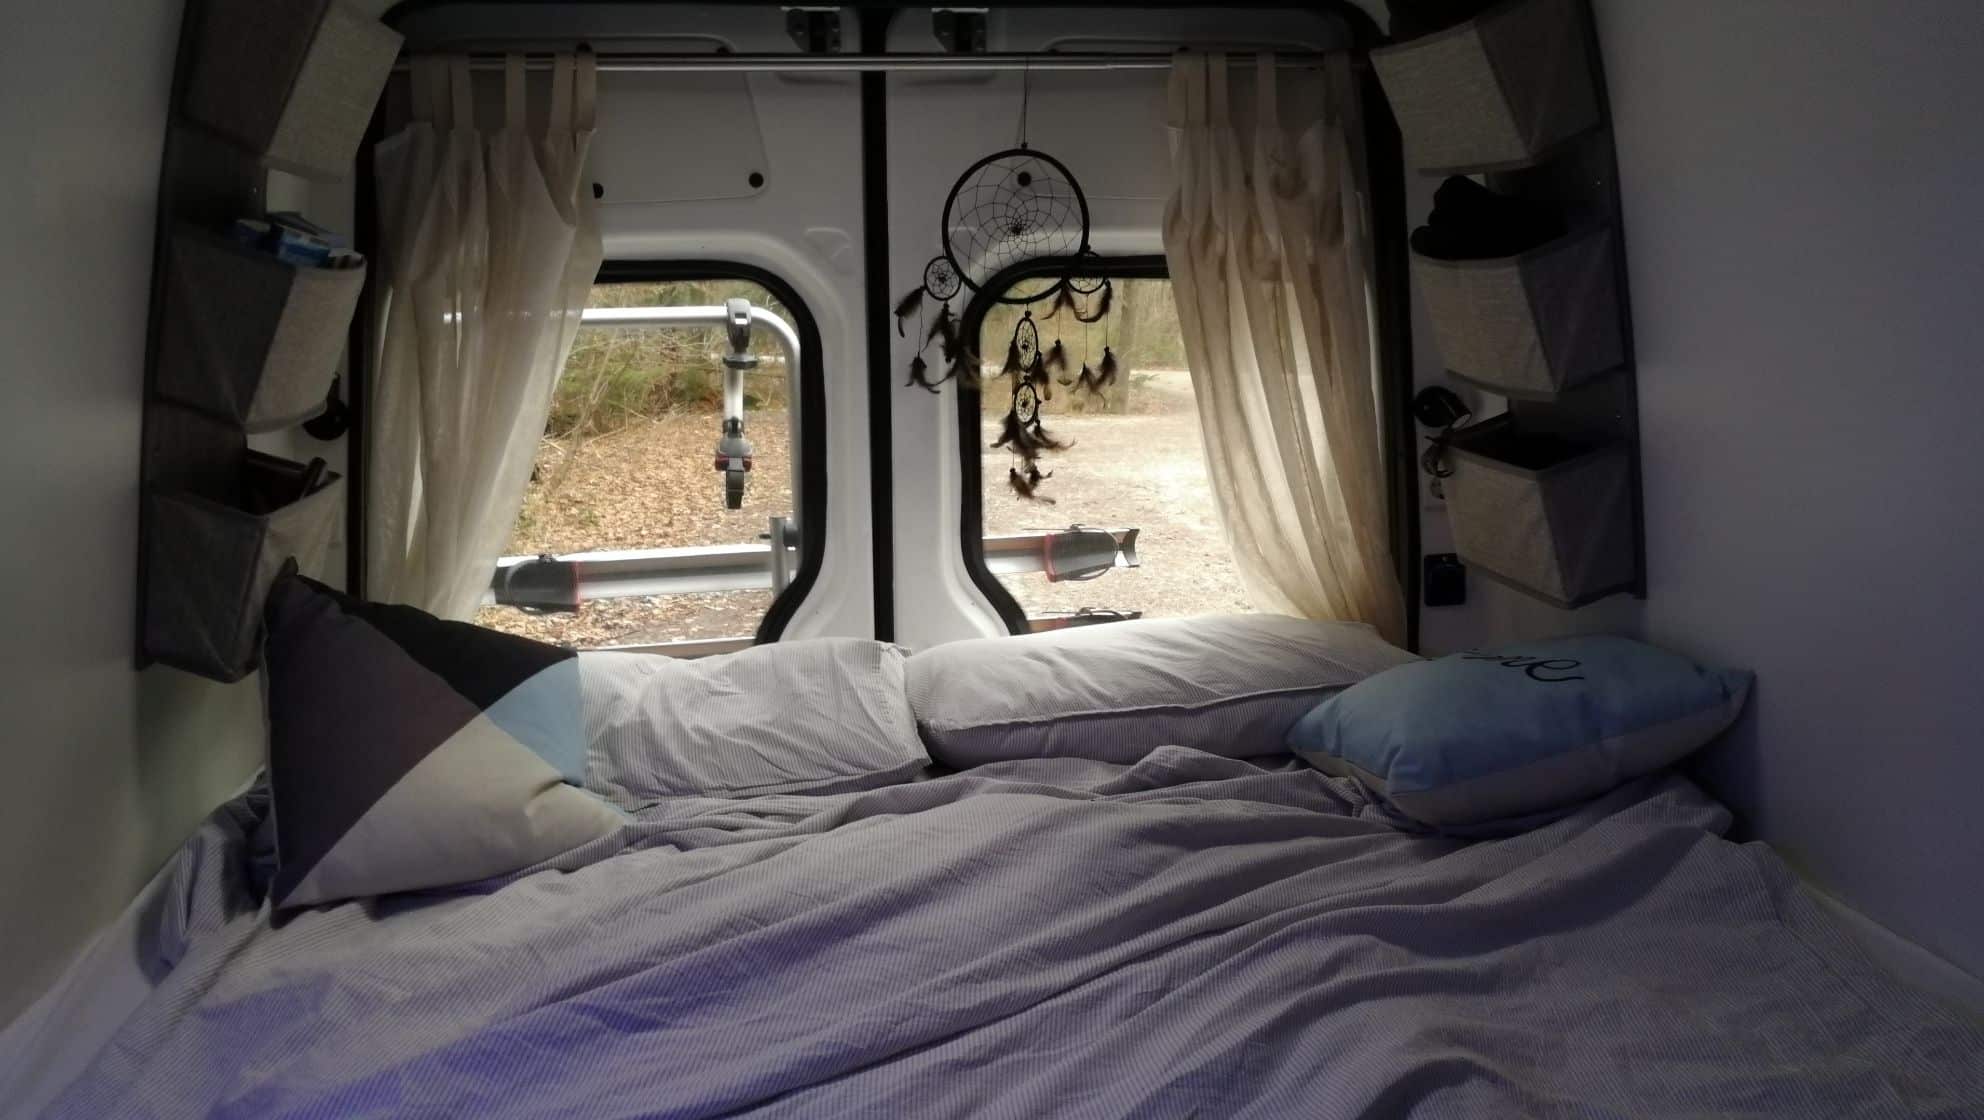 DIY fully assembled camper van windows